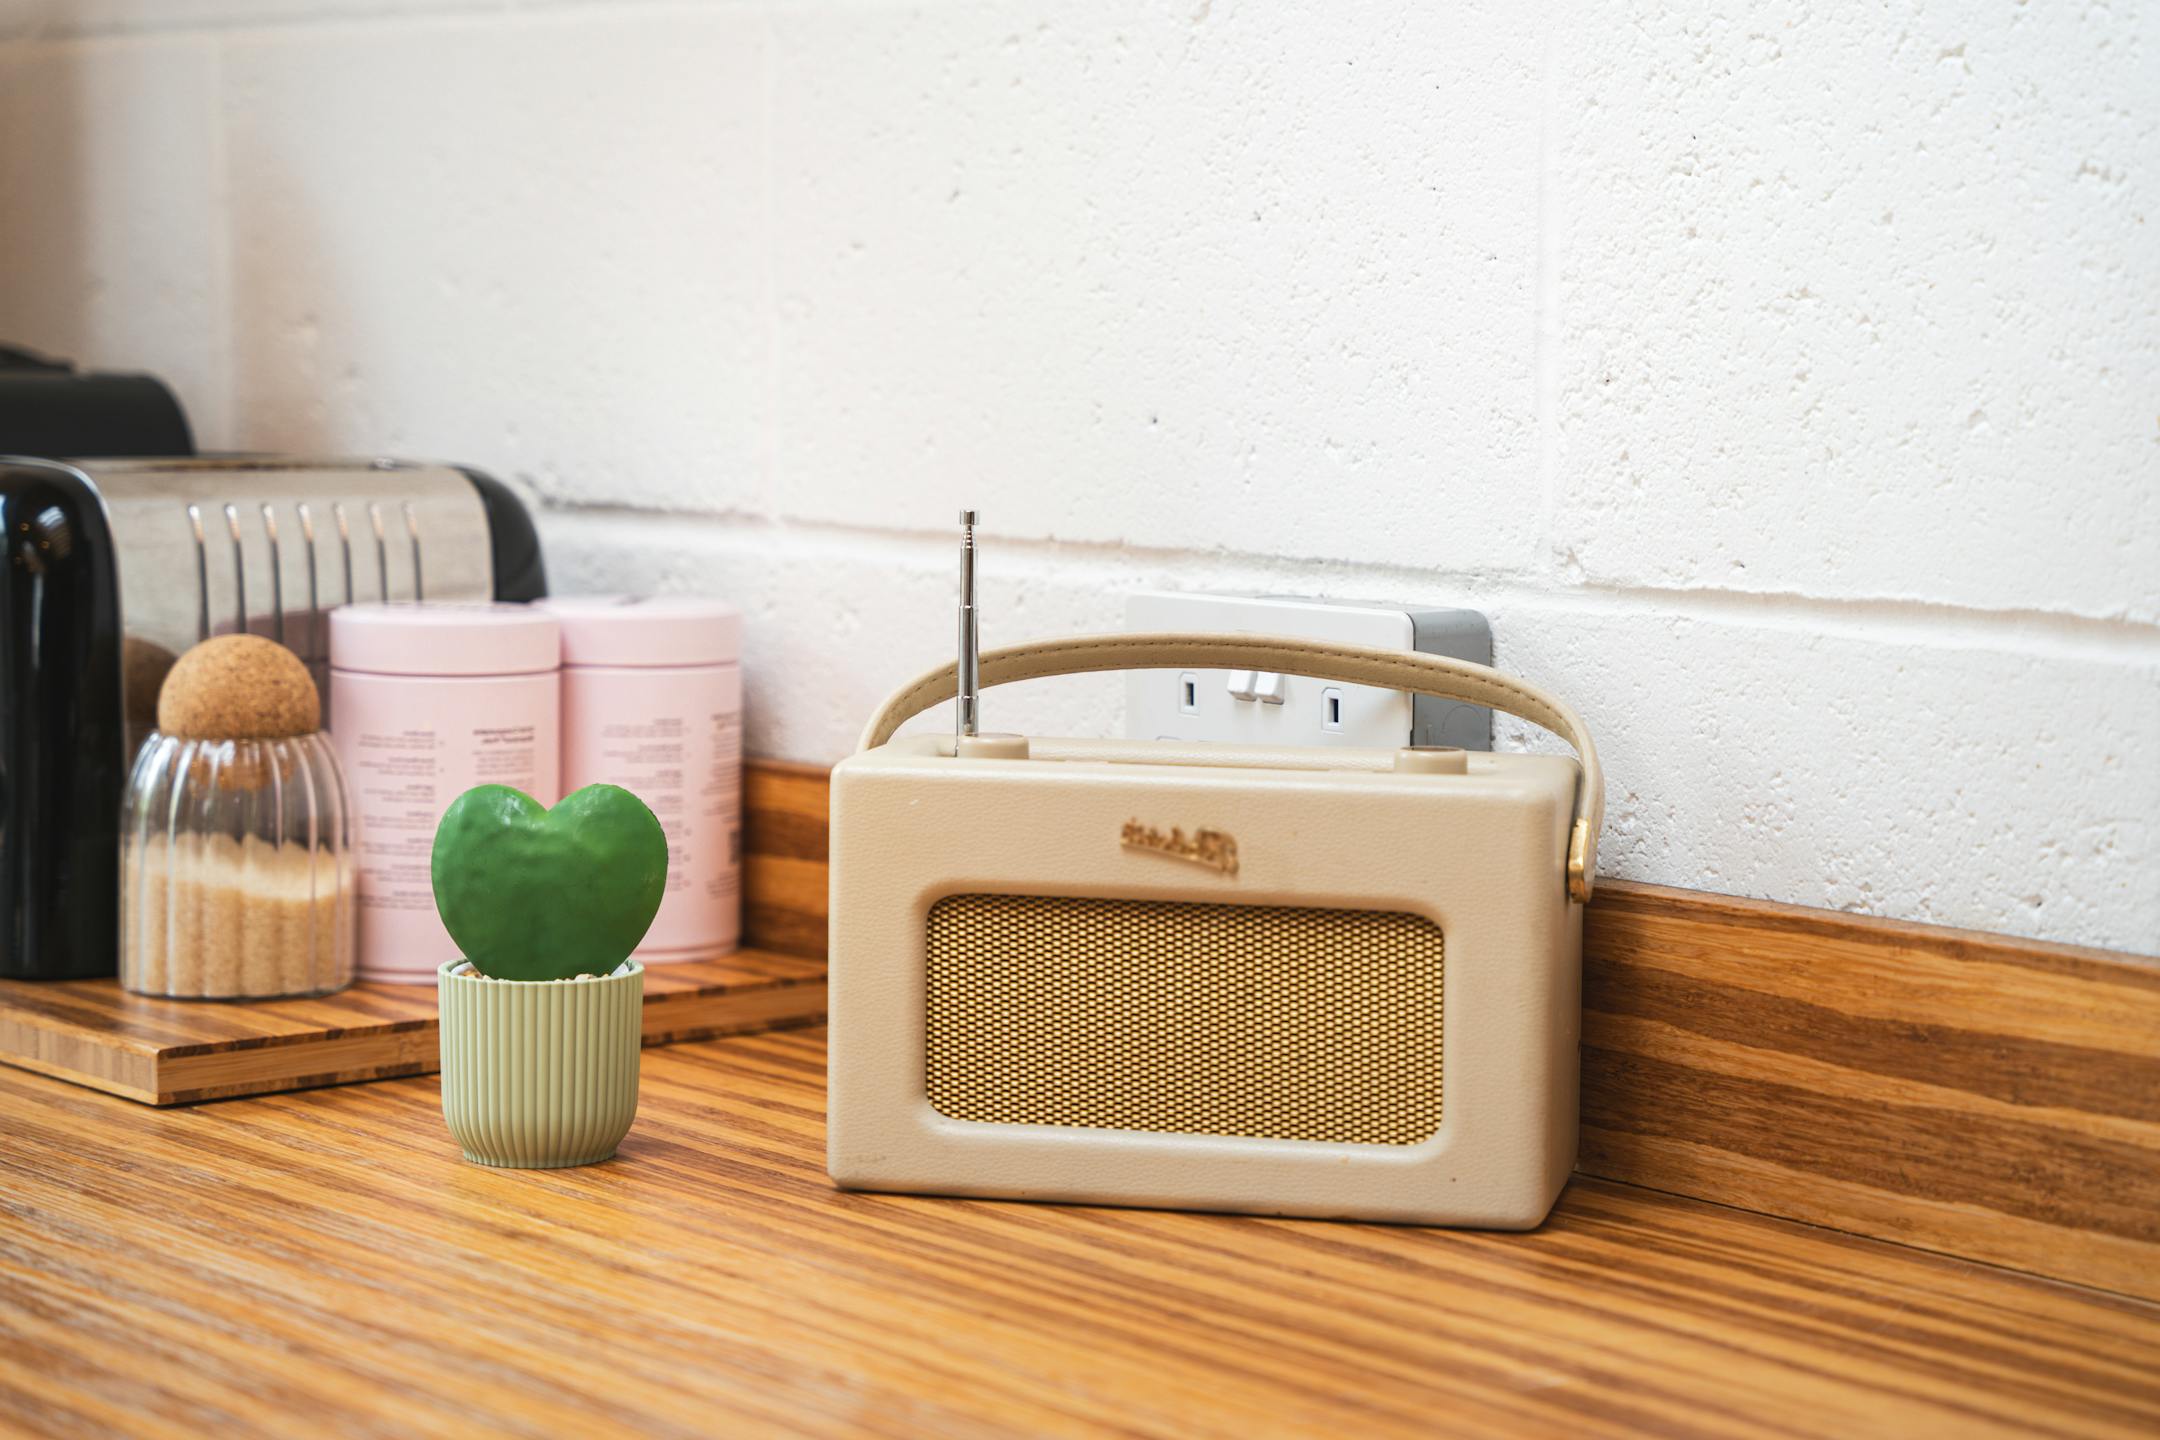 Artificial green hoya heart next to radio